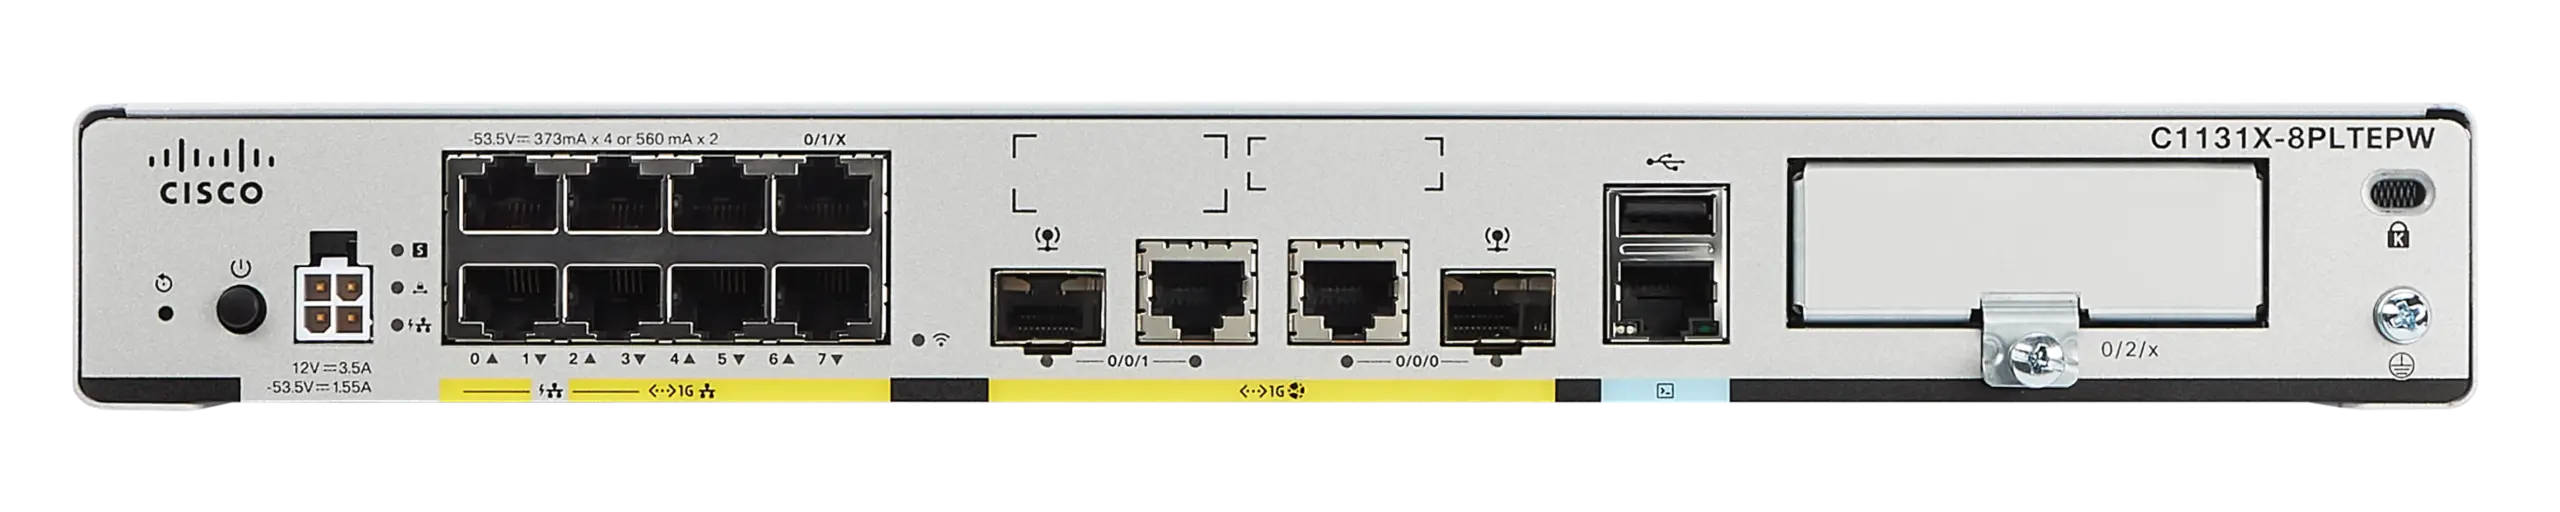 Cisco C1131X-8PLTEPWE - Router